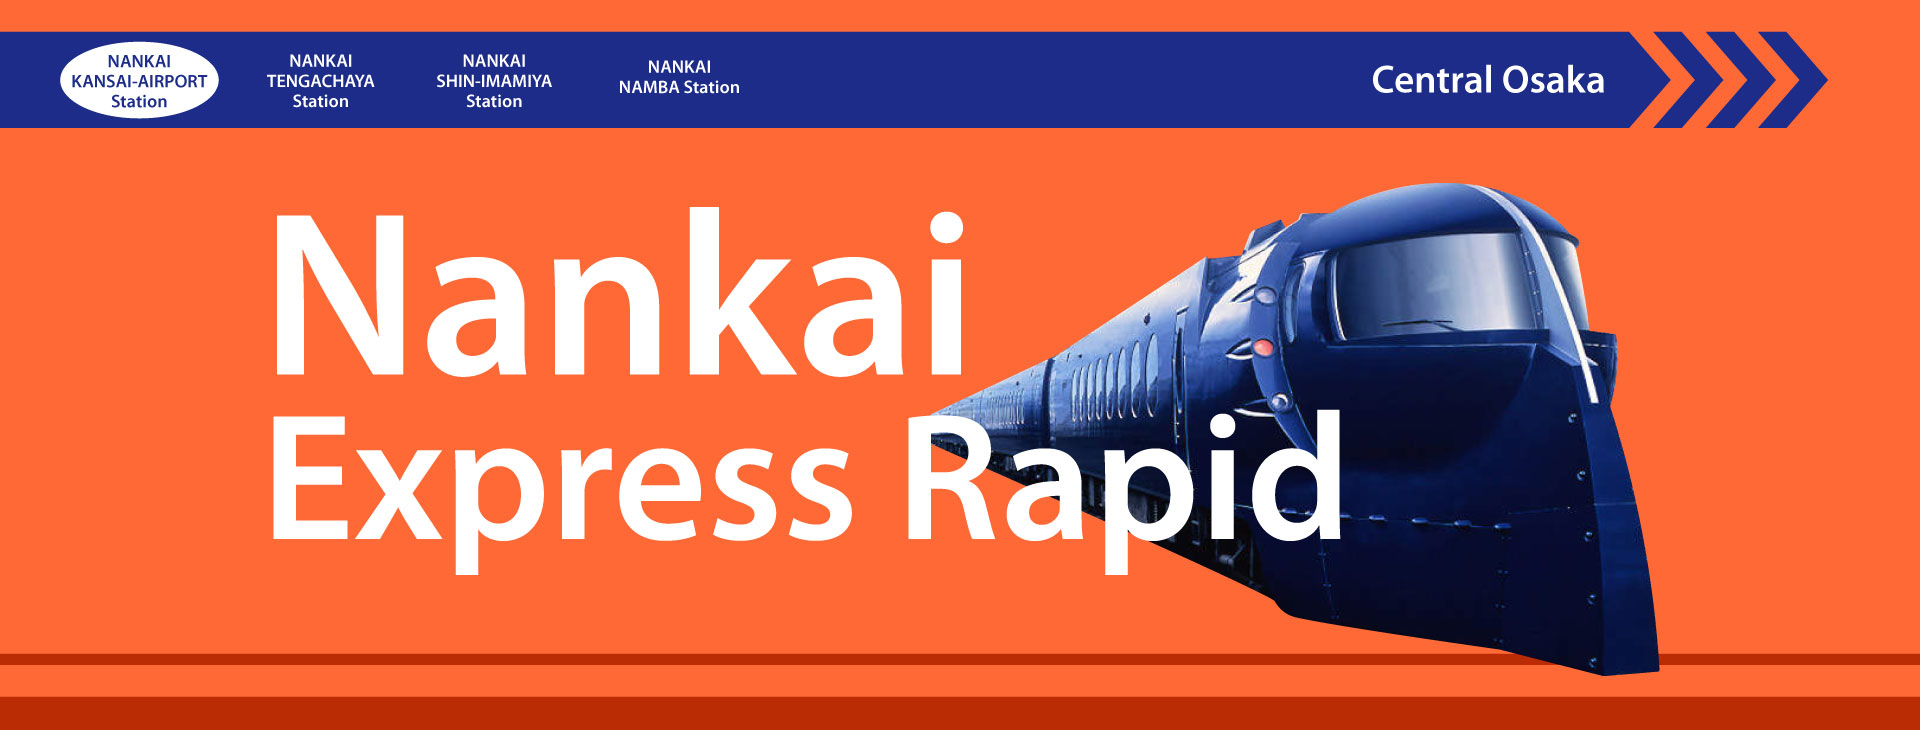 Nankai Express Rapid, จำหน่าย Nankai Express Rapid, Nankai, Nankai Kansai-Airport Station, Nankai Shin-Imamiya Station, Nankai Namba Station, Central Osaka, Wendy Tour, เที่ยวโอซาก้า, เที่ยว Kansai, เที่ยวญี่ปุ่นด้วยตัวเอง, พาสรถไฟญี่ปุ่น, ตั๋วรถไฟ, ตั๋วรถไฟด่วนพิเศษ, บัตรรถไฟ, รถไฟใต้ดิน, Nankai Tengachaya Station, Limited Express, ตั๋วไปกลับ, ตั๋วเที่ยวเดียว, Yokaso Osaka Ticket, Ticket, Osaka City, Economy Ticket, รถไฟใต้ดินเมืองโอซาก้า, ตั๋วผ่านไม่จำกัดจำนวนครั้ง